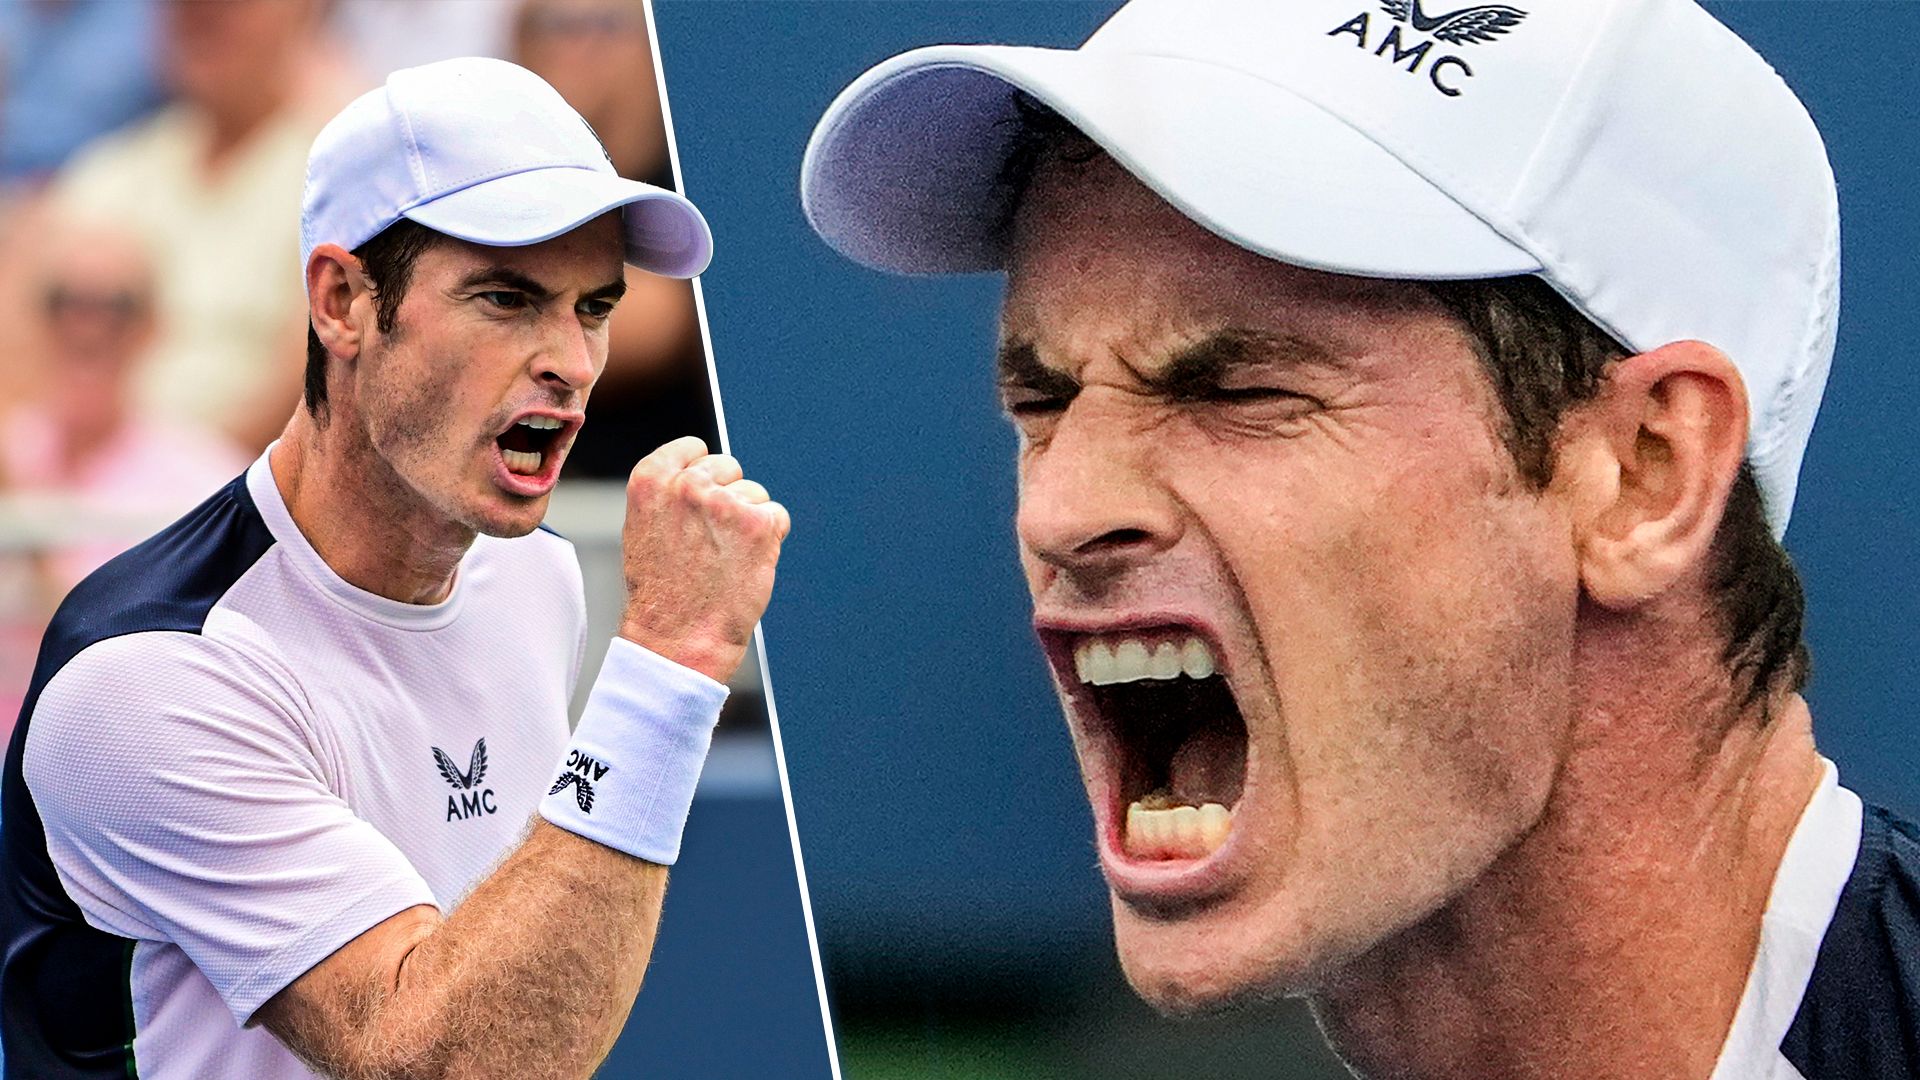 Qatar Open: Andy Murray vs Jakub Mensik LIVE!